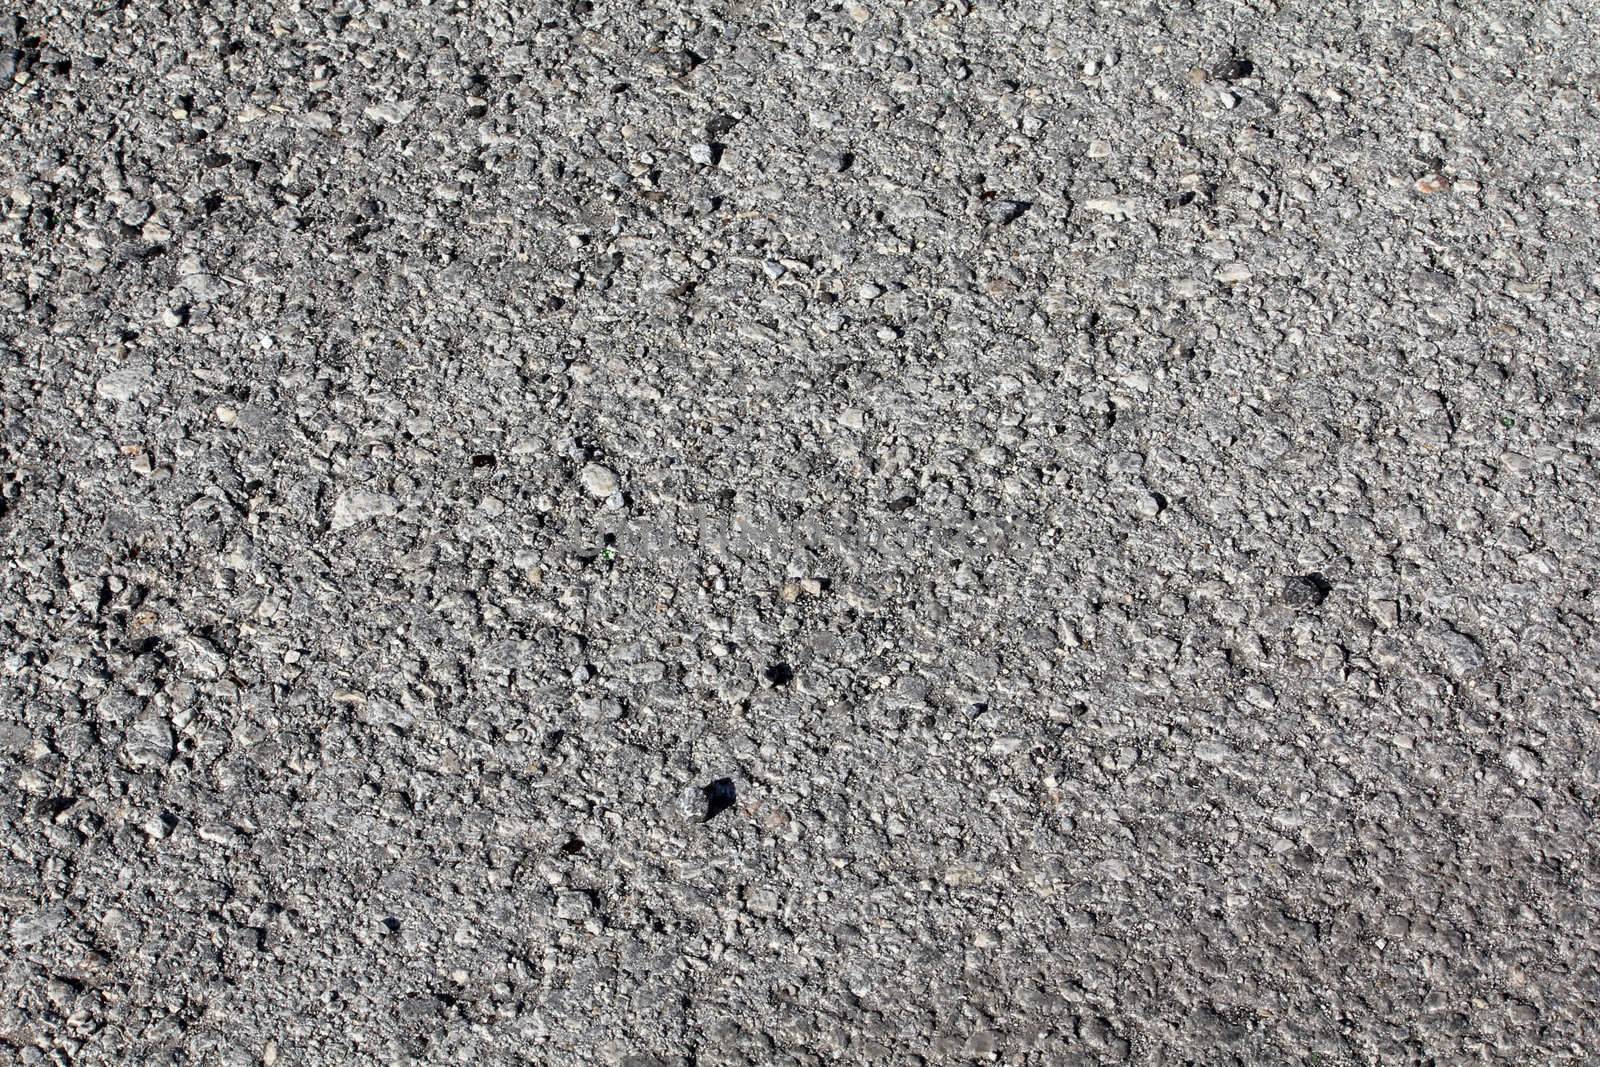 a grey gravel textured background